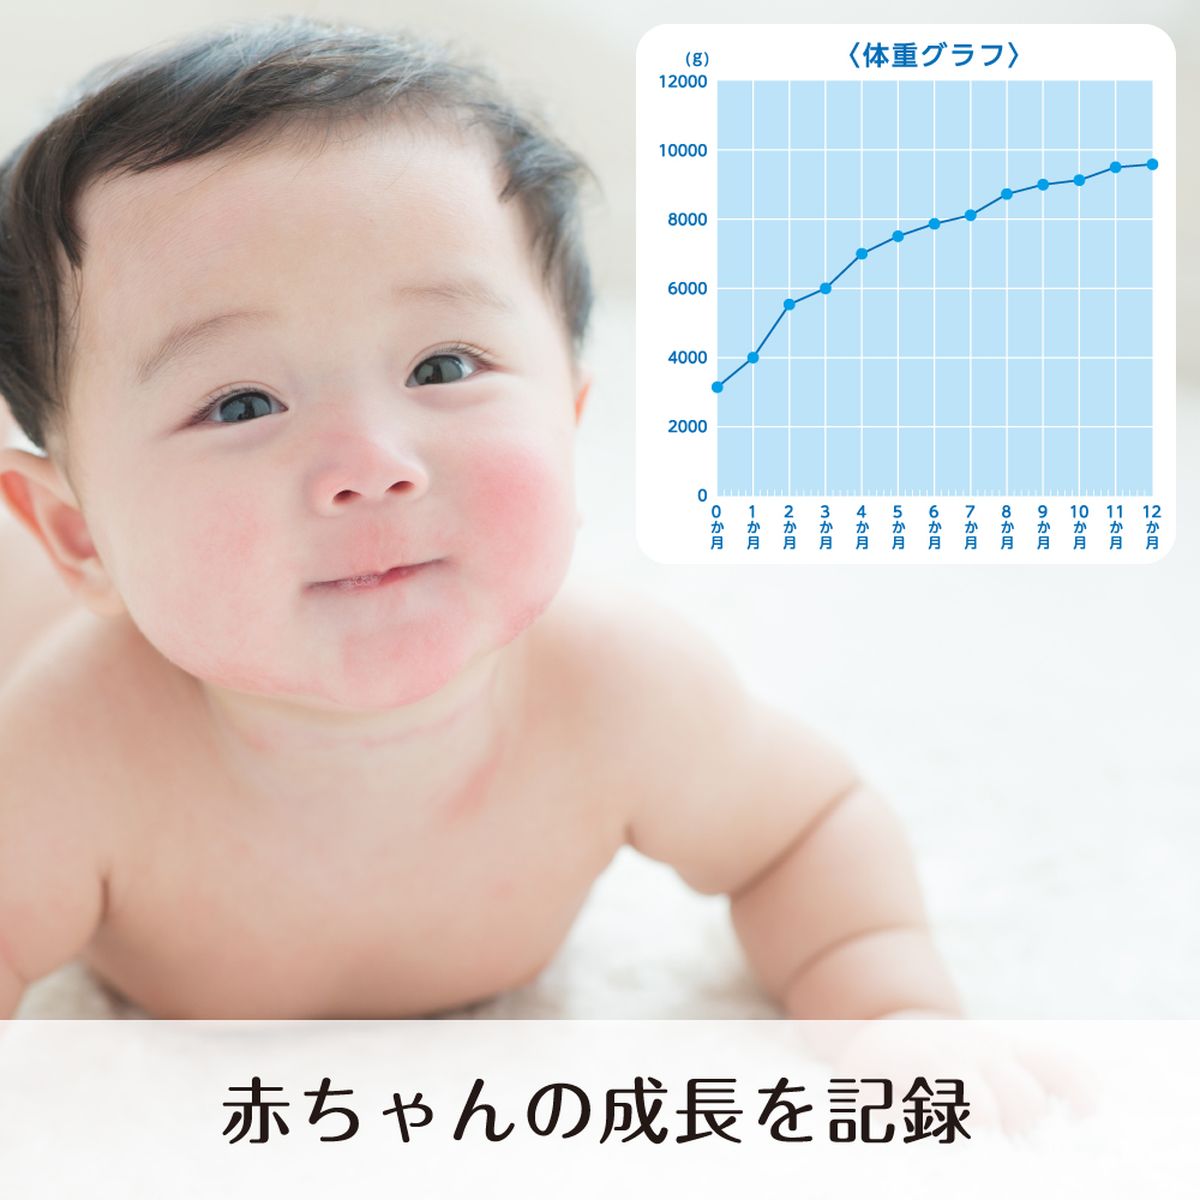 TANITA nometa 授乳量機能付 ベビー スケール 赤ちゃん用 体重計